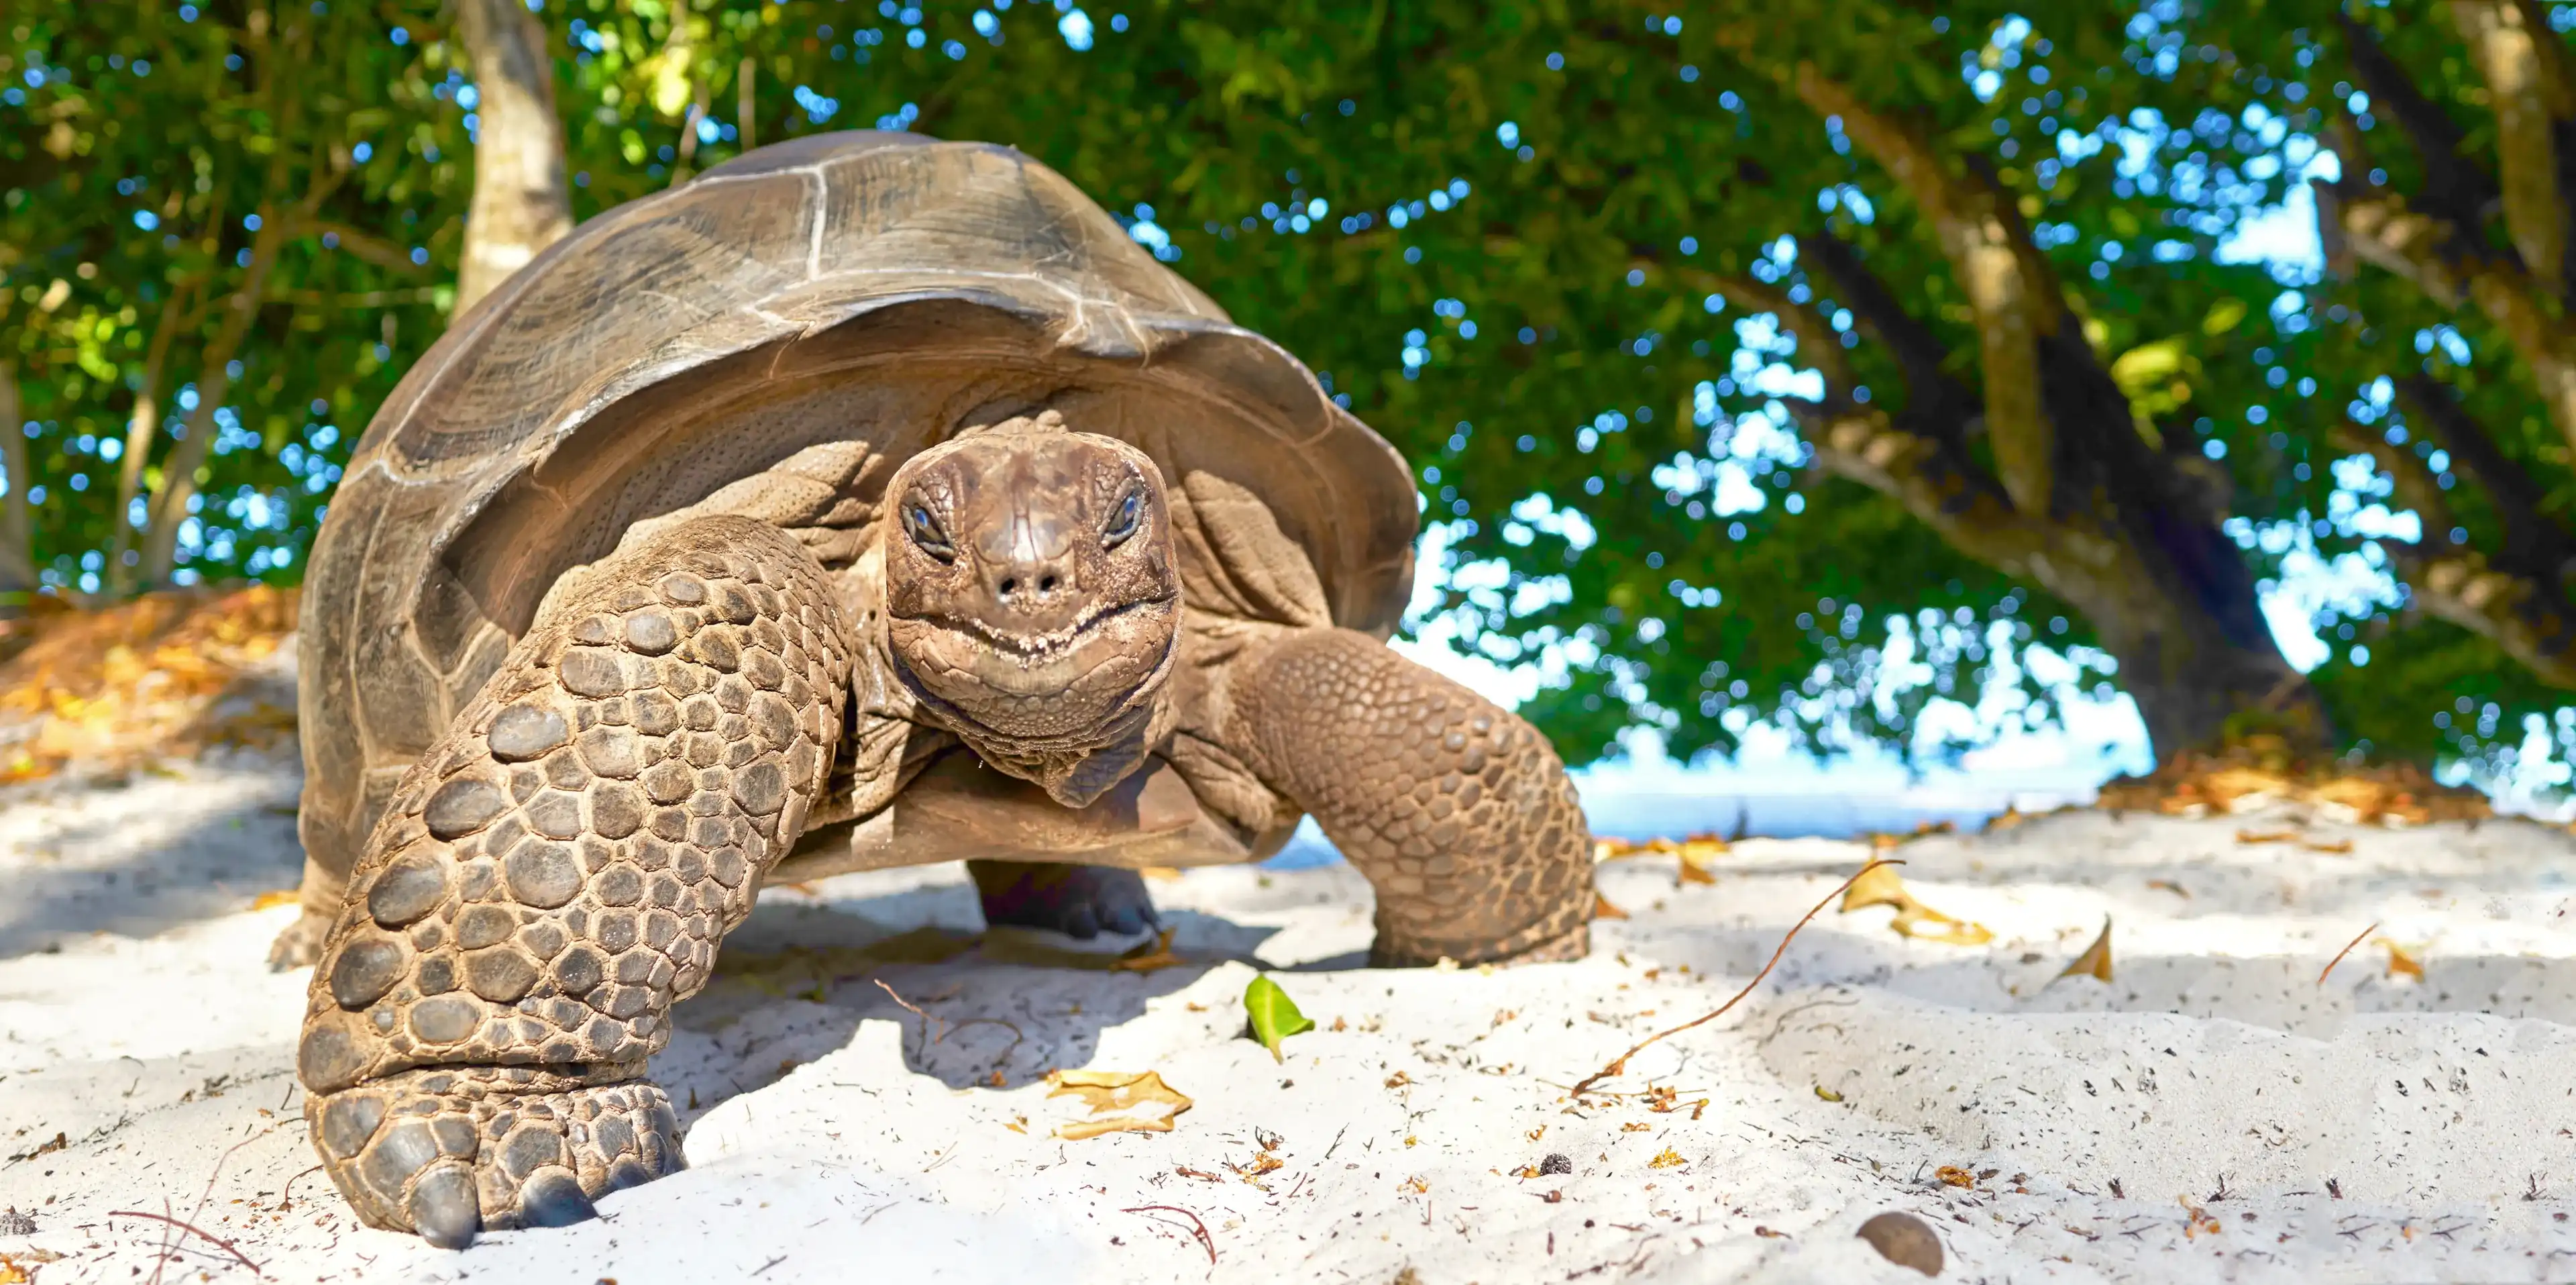 Seychelles giant tortoise - wildlife, smiling happy turtle